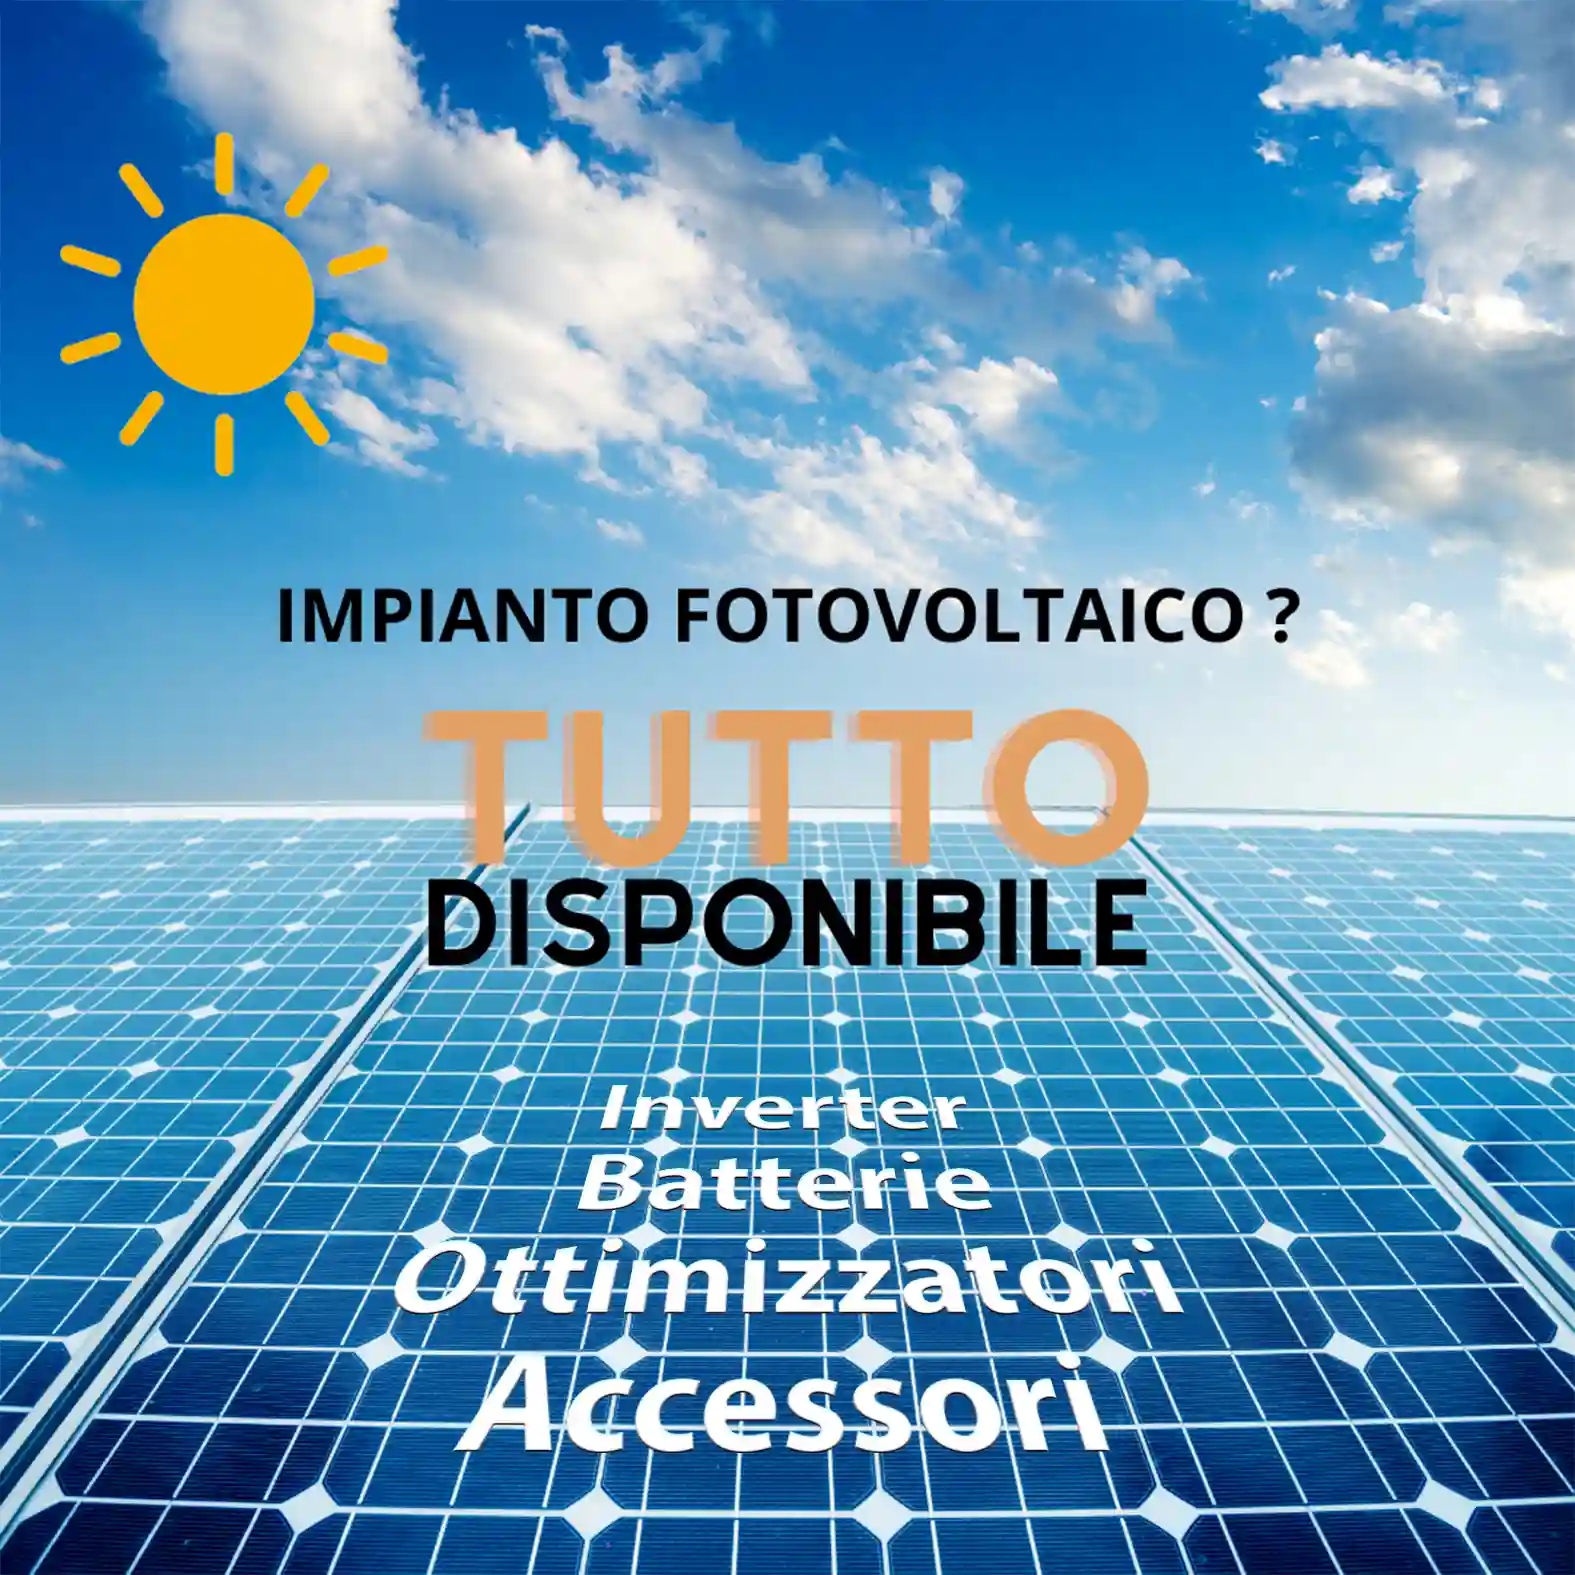 fotovoltaico disponibile